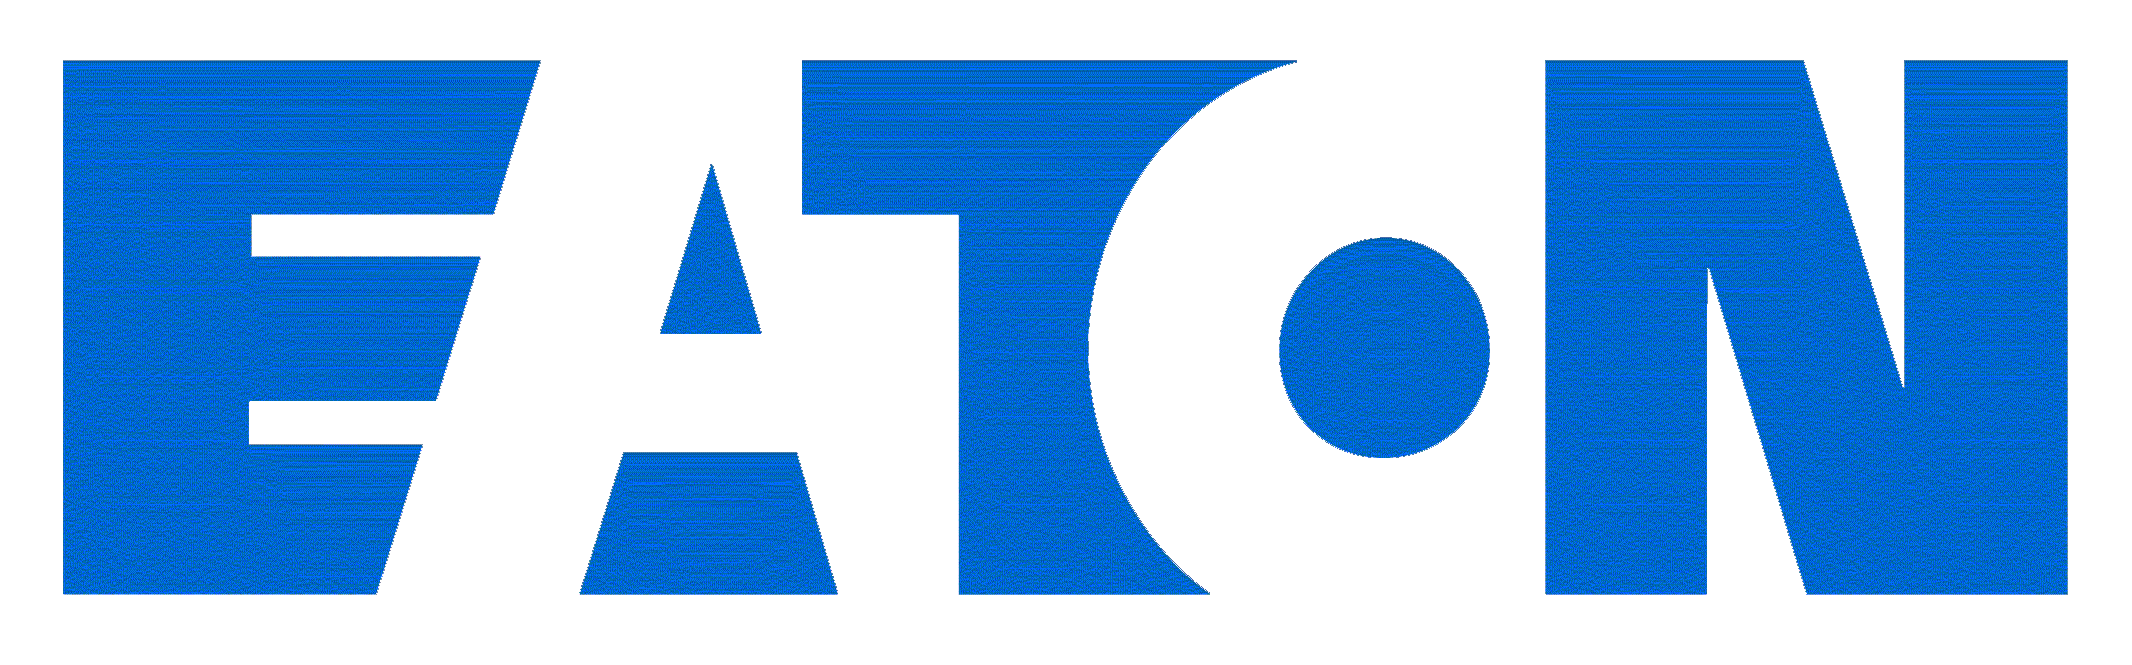 Eaton Logo Wallpaper